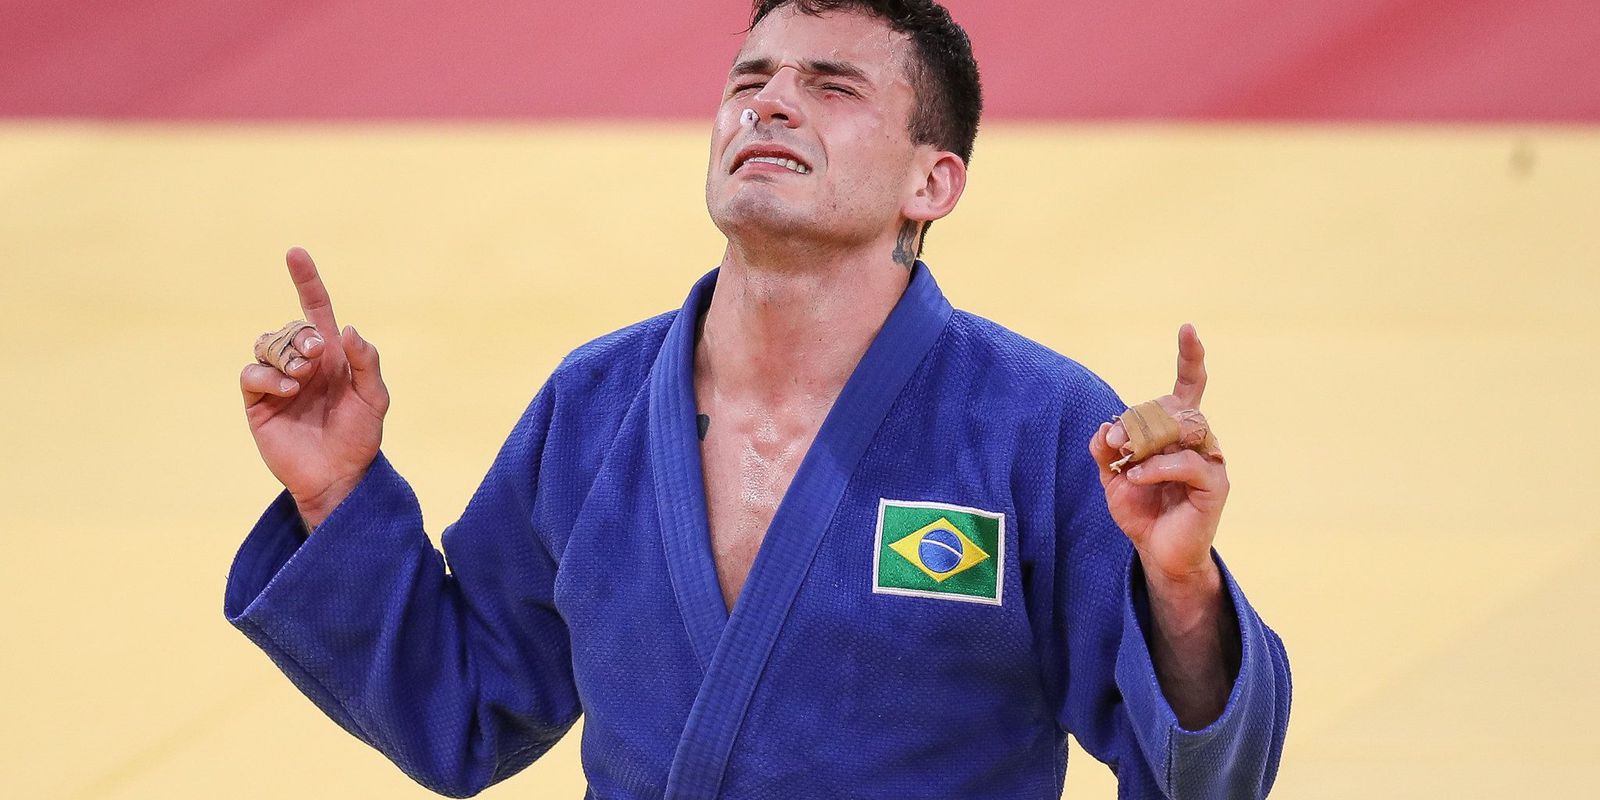 Daniel Cargnin and Ketleyn Quadros take bronze in Judo Grand Prix